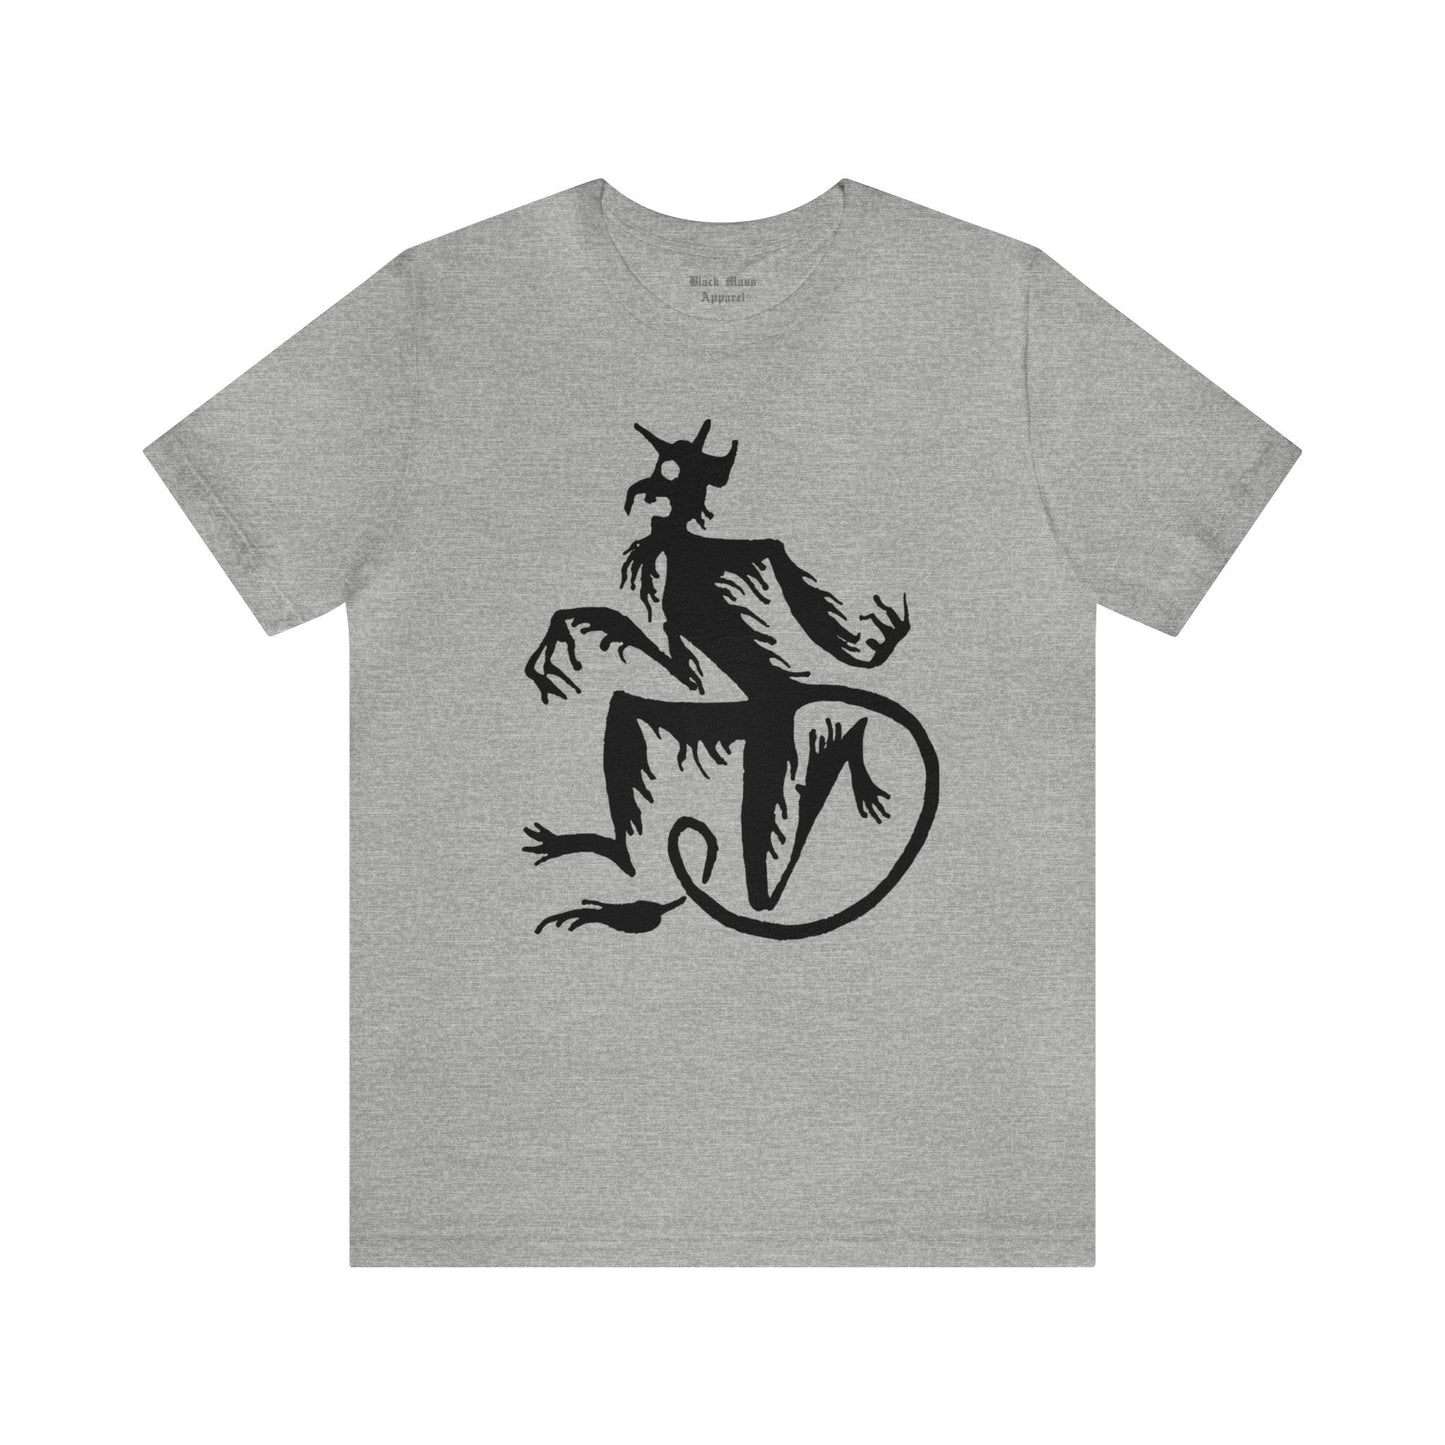 Demon From Slavic Mythology - Black Mass Apparel - T-Shirt